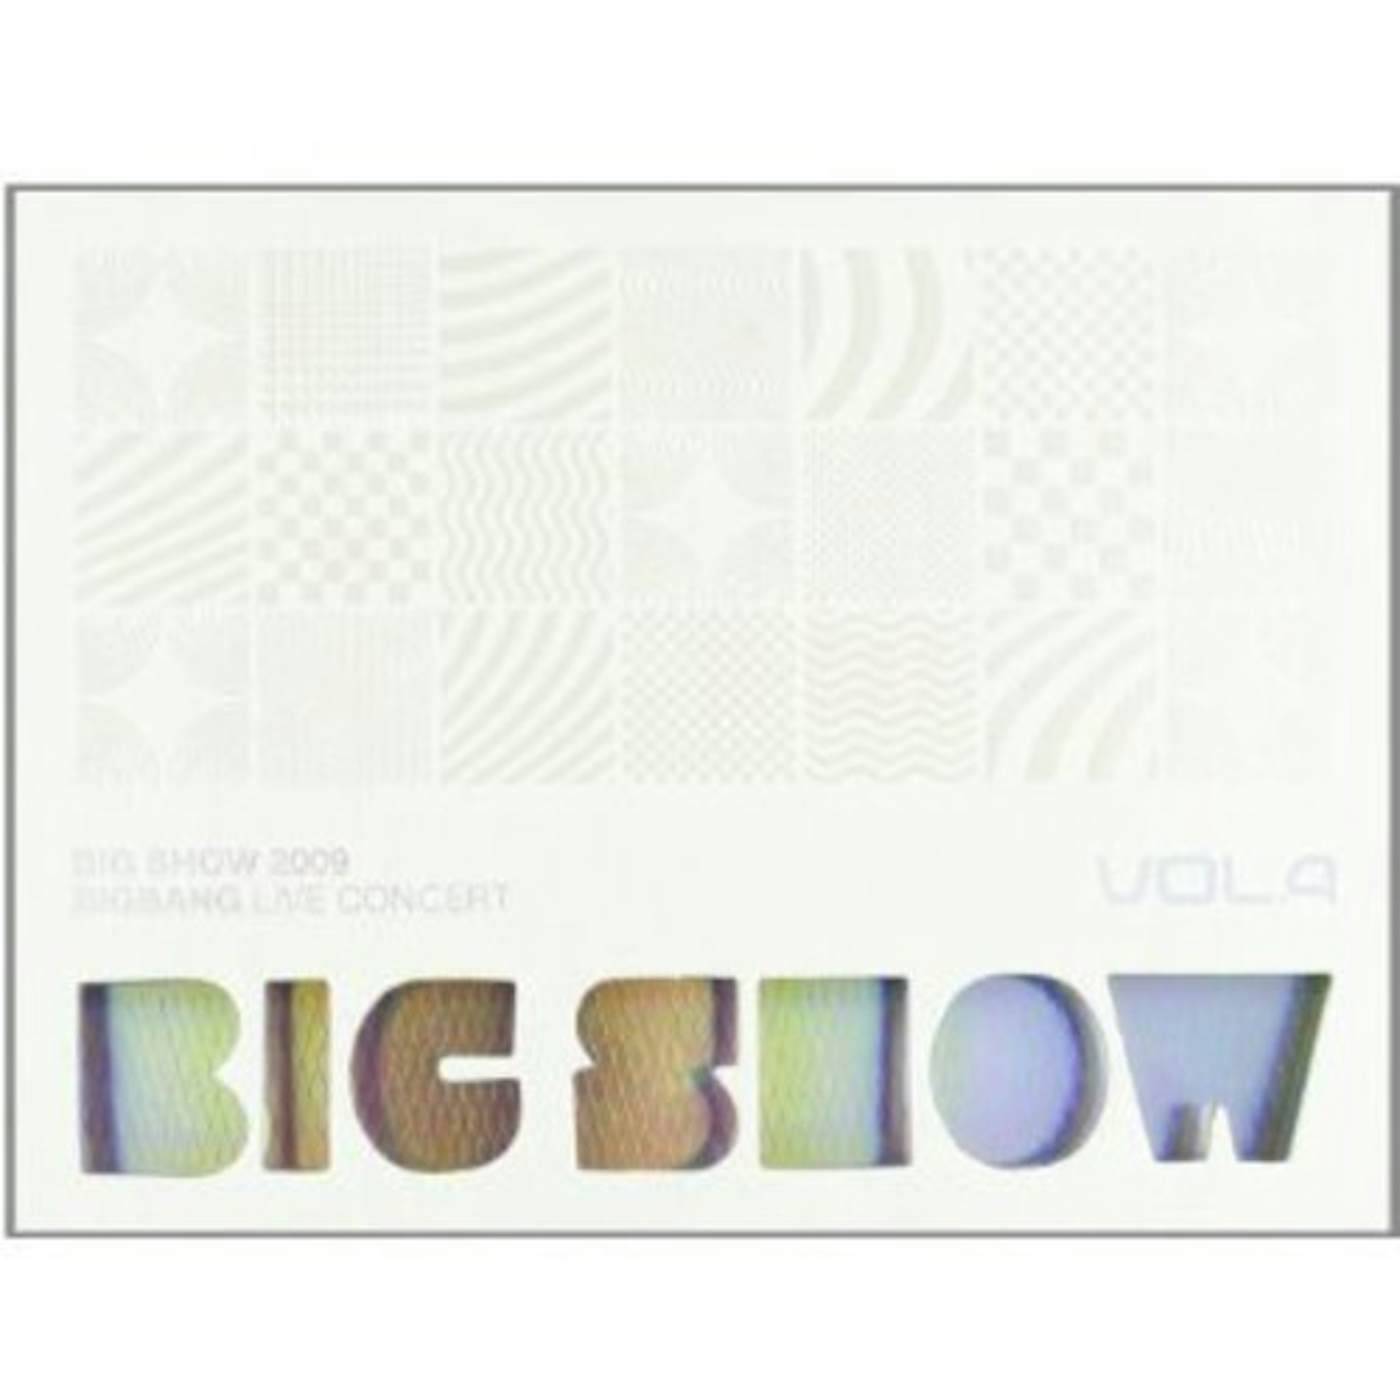 BIG SHOW: 2009 BIGBANG CONCERT LIVE ALBUM CD